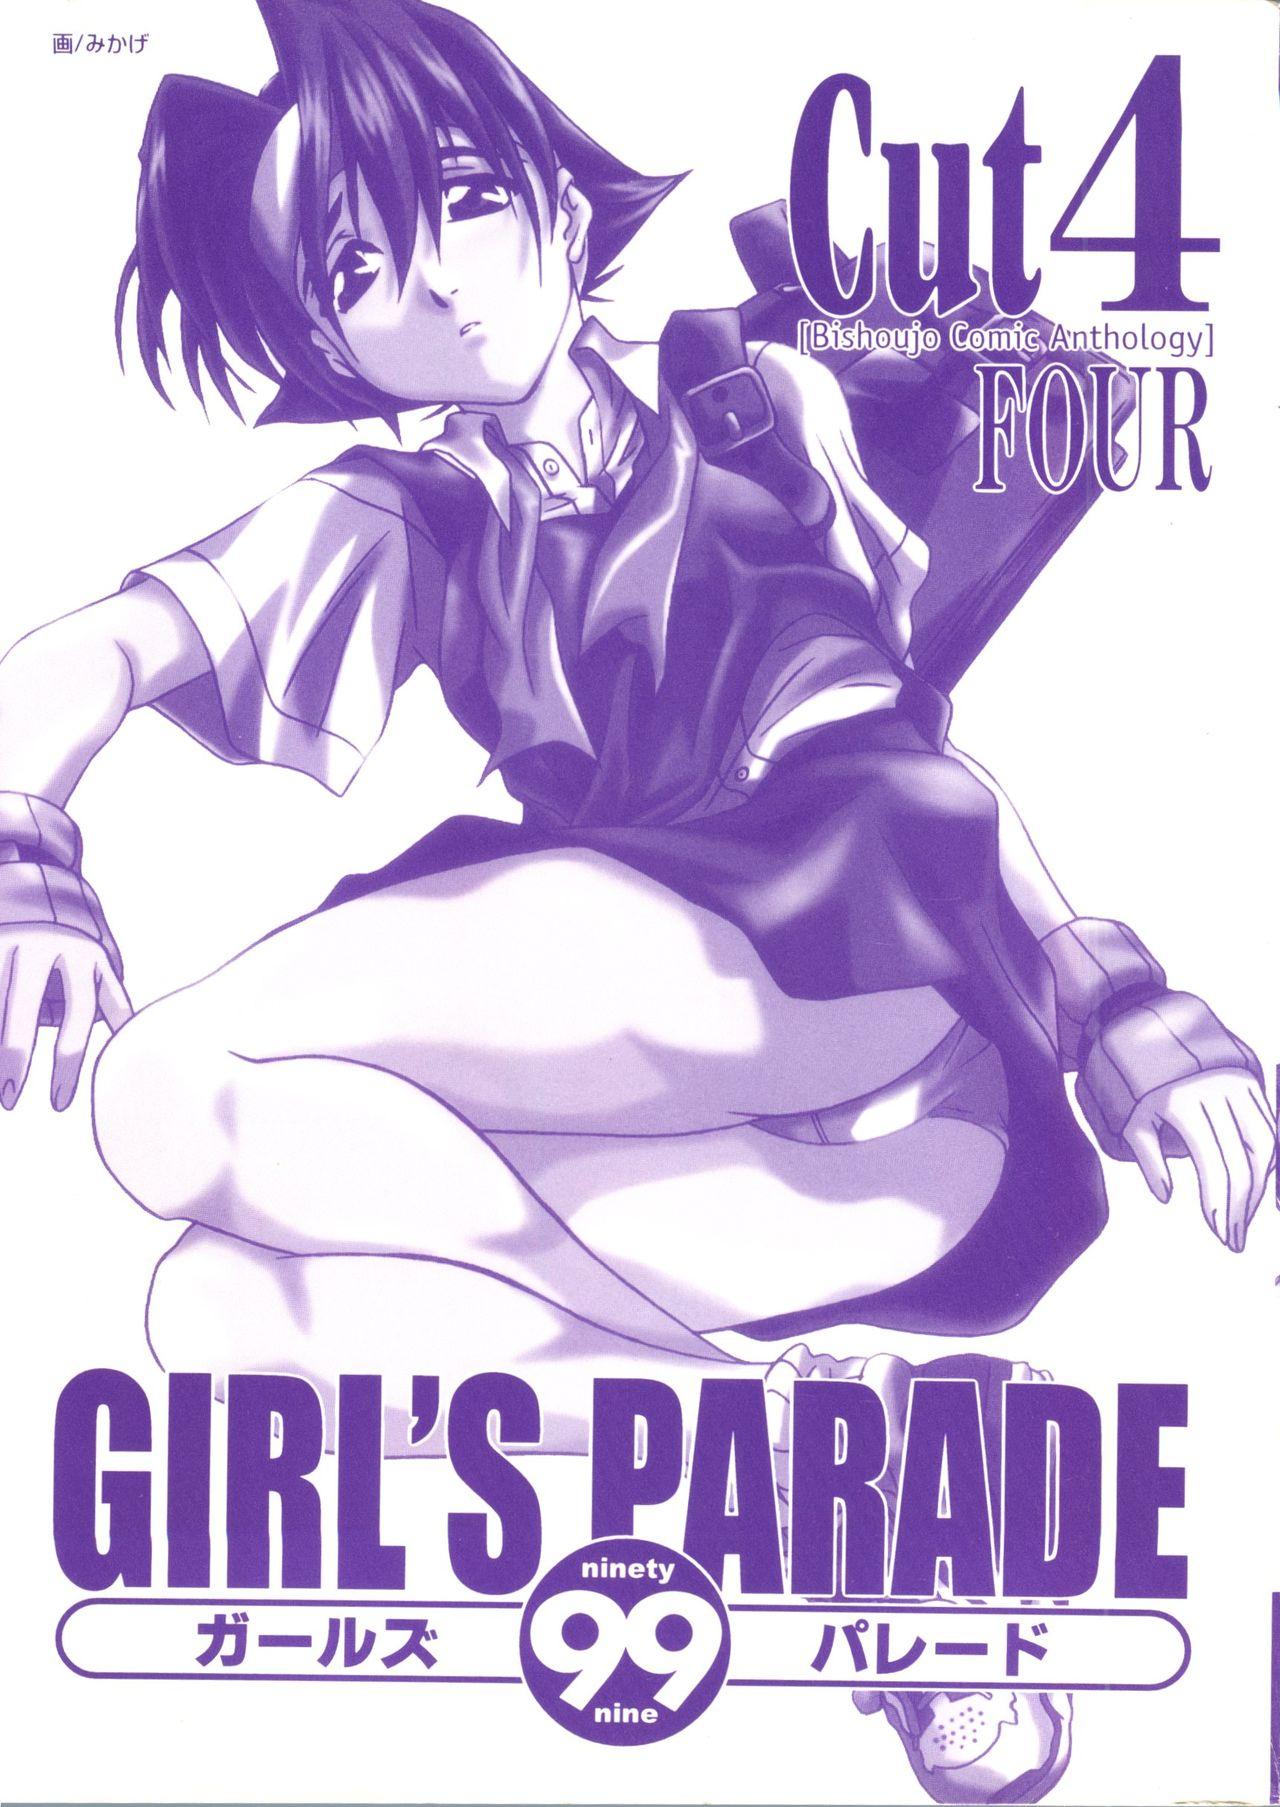 Cunt Girl's Parade 99 Cut 4 - Samurai spirits Rival schools Revolutionary girl utena Star gladiator Sapphic Erotica - Page 2